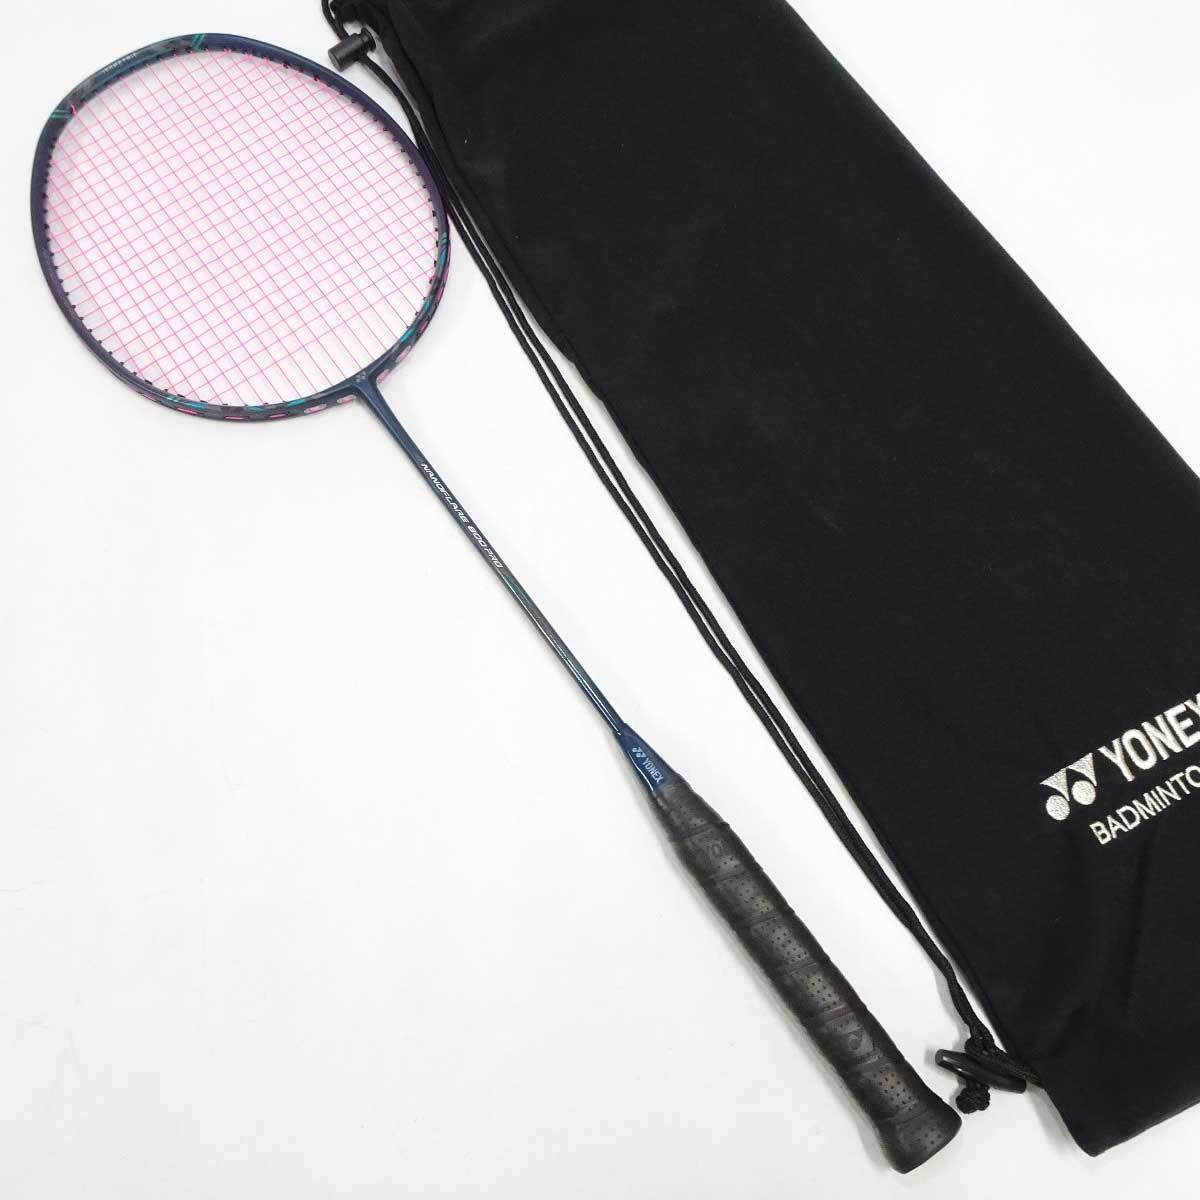 [ used ] Yonex NANOFLARE 800 PRO badminton racket nano flair 800 Pro 4UG5 NF-800P YONEX